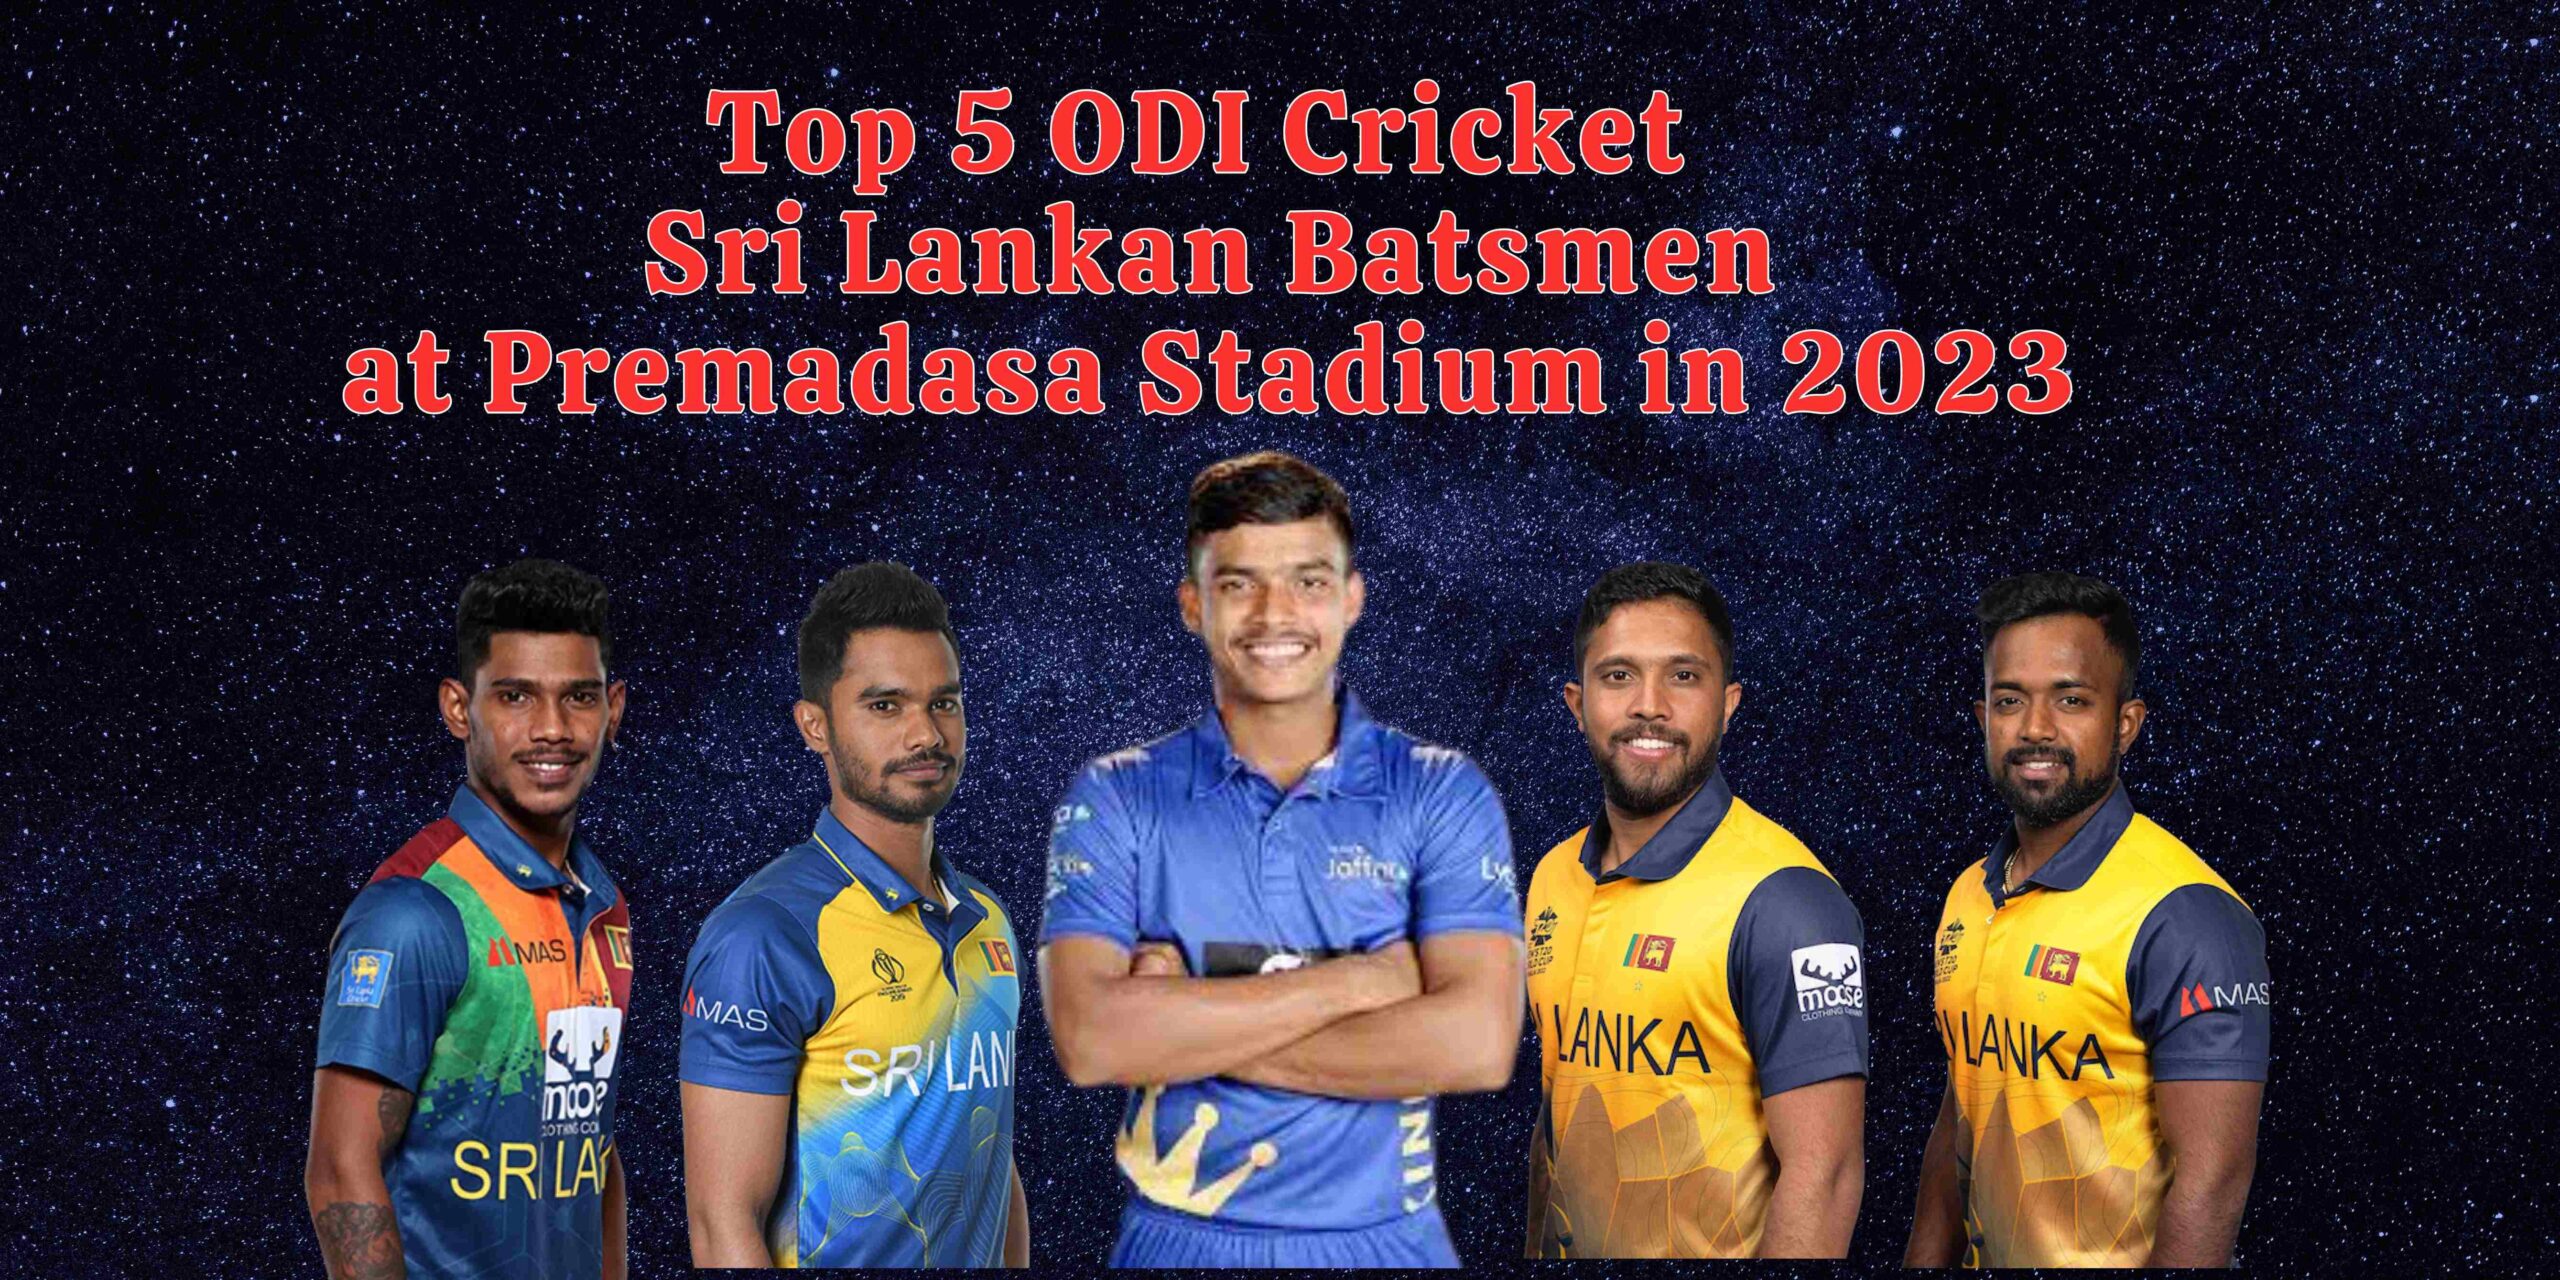 Unveiling the Top 5 ODI Cricket Sri Lankan Batsmen at Premadasa Stadium in 2023